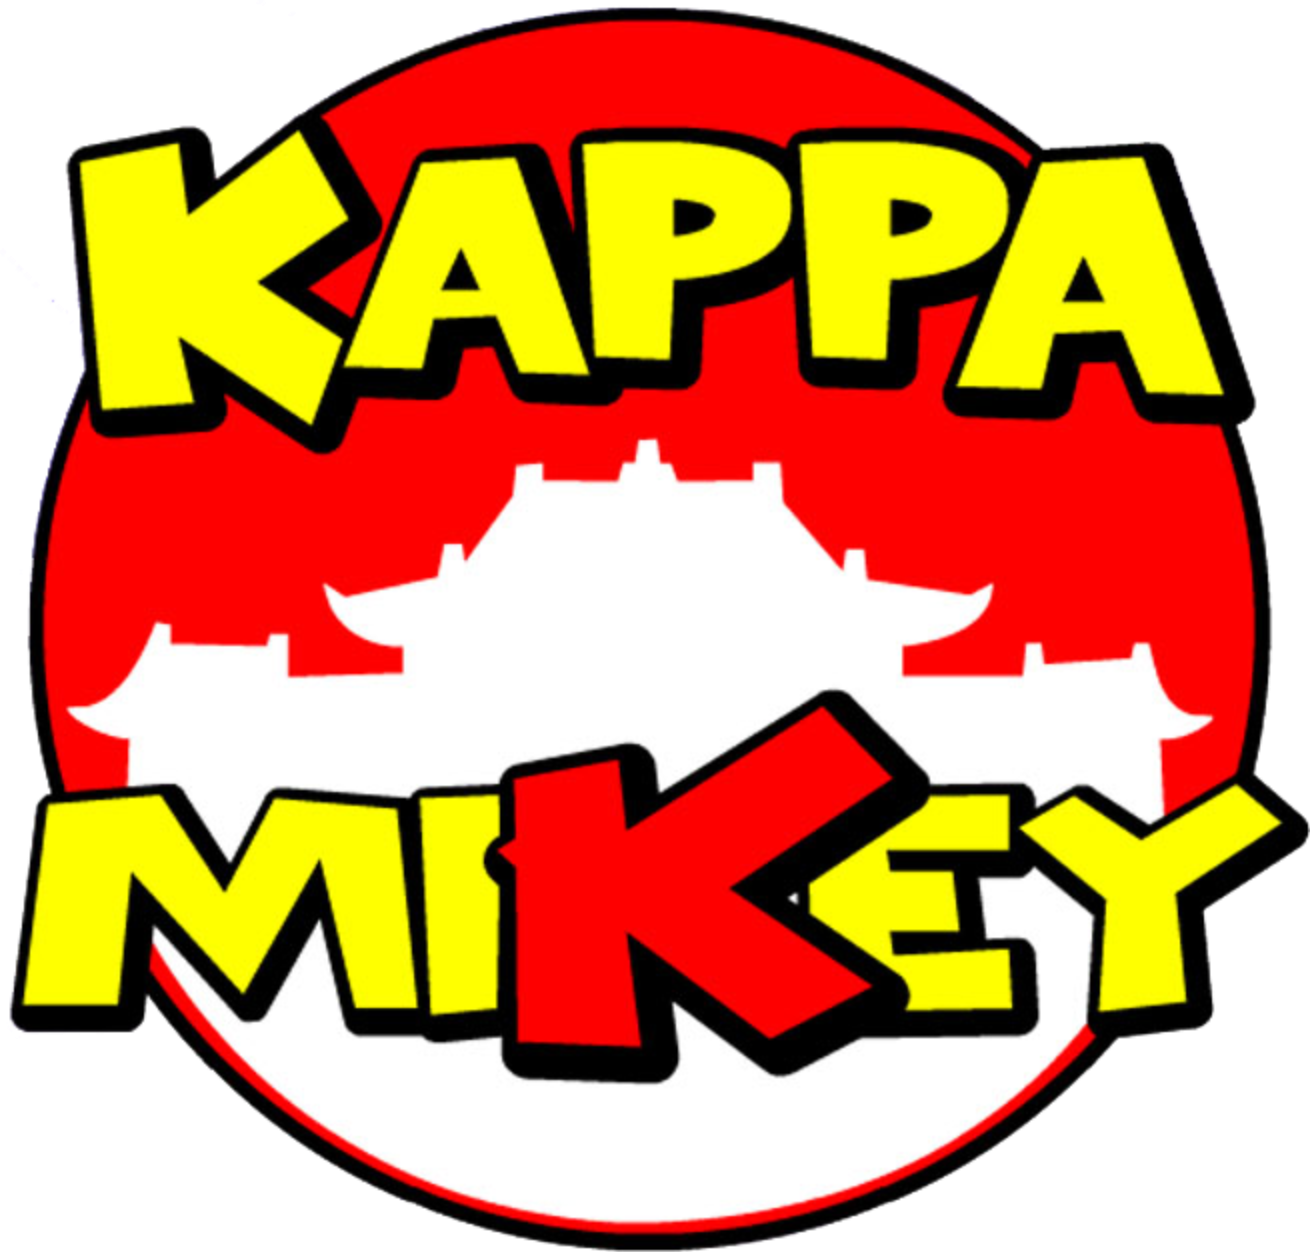 Kappa Mikey (6 DVDs Box Set)